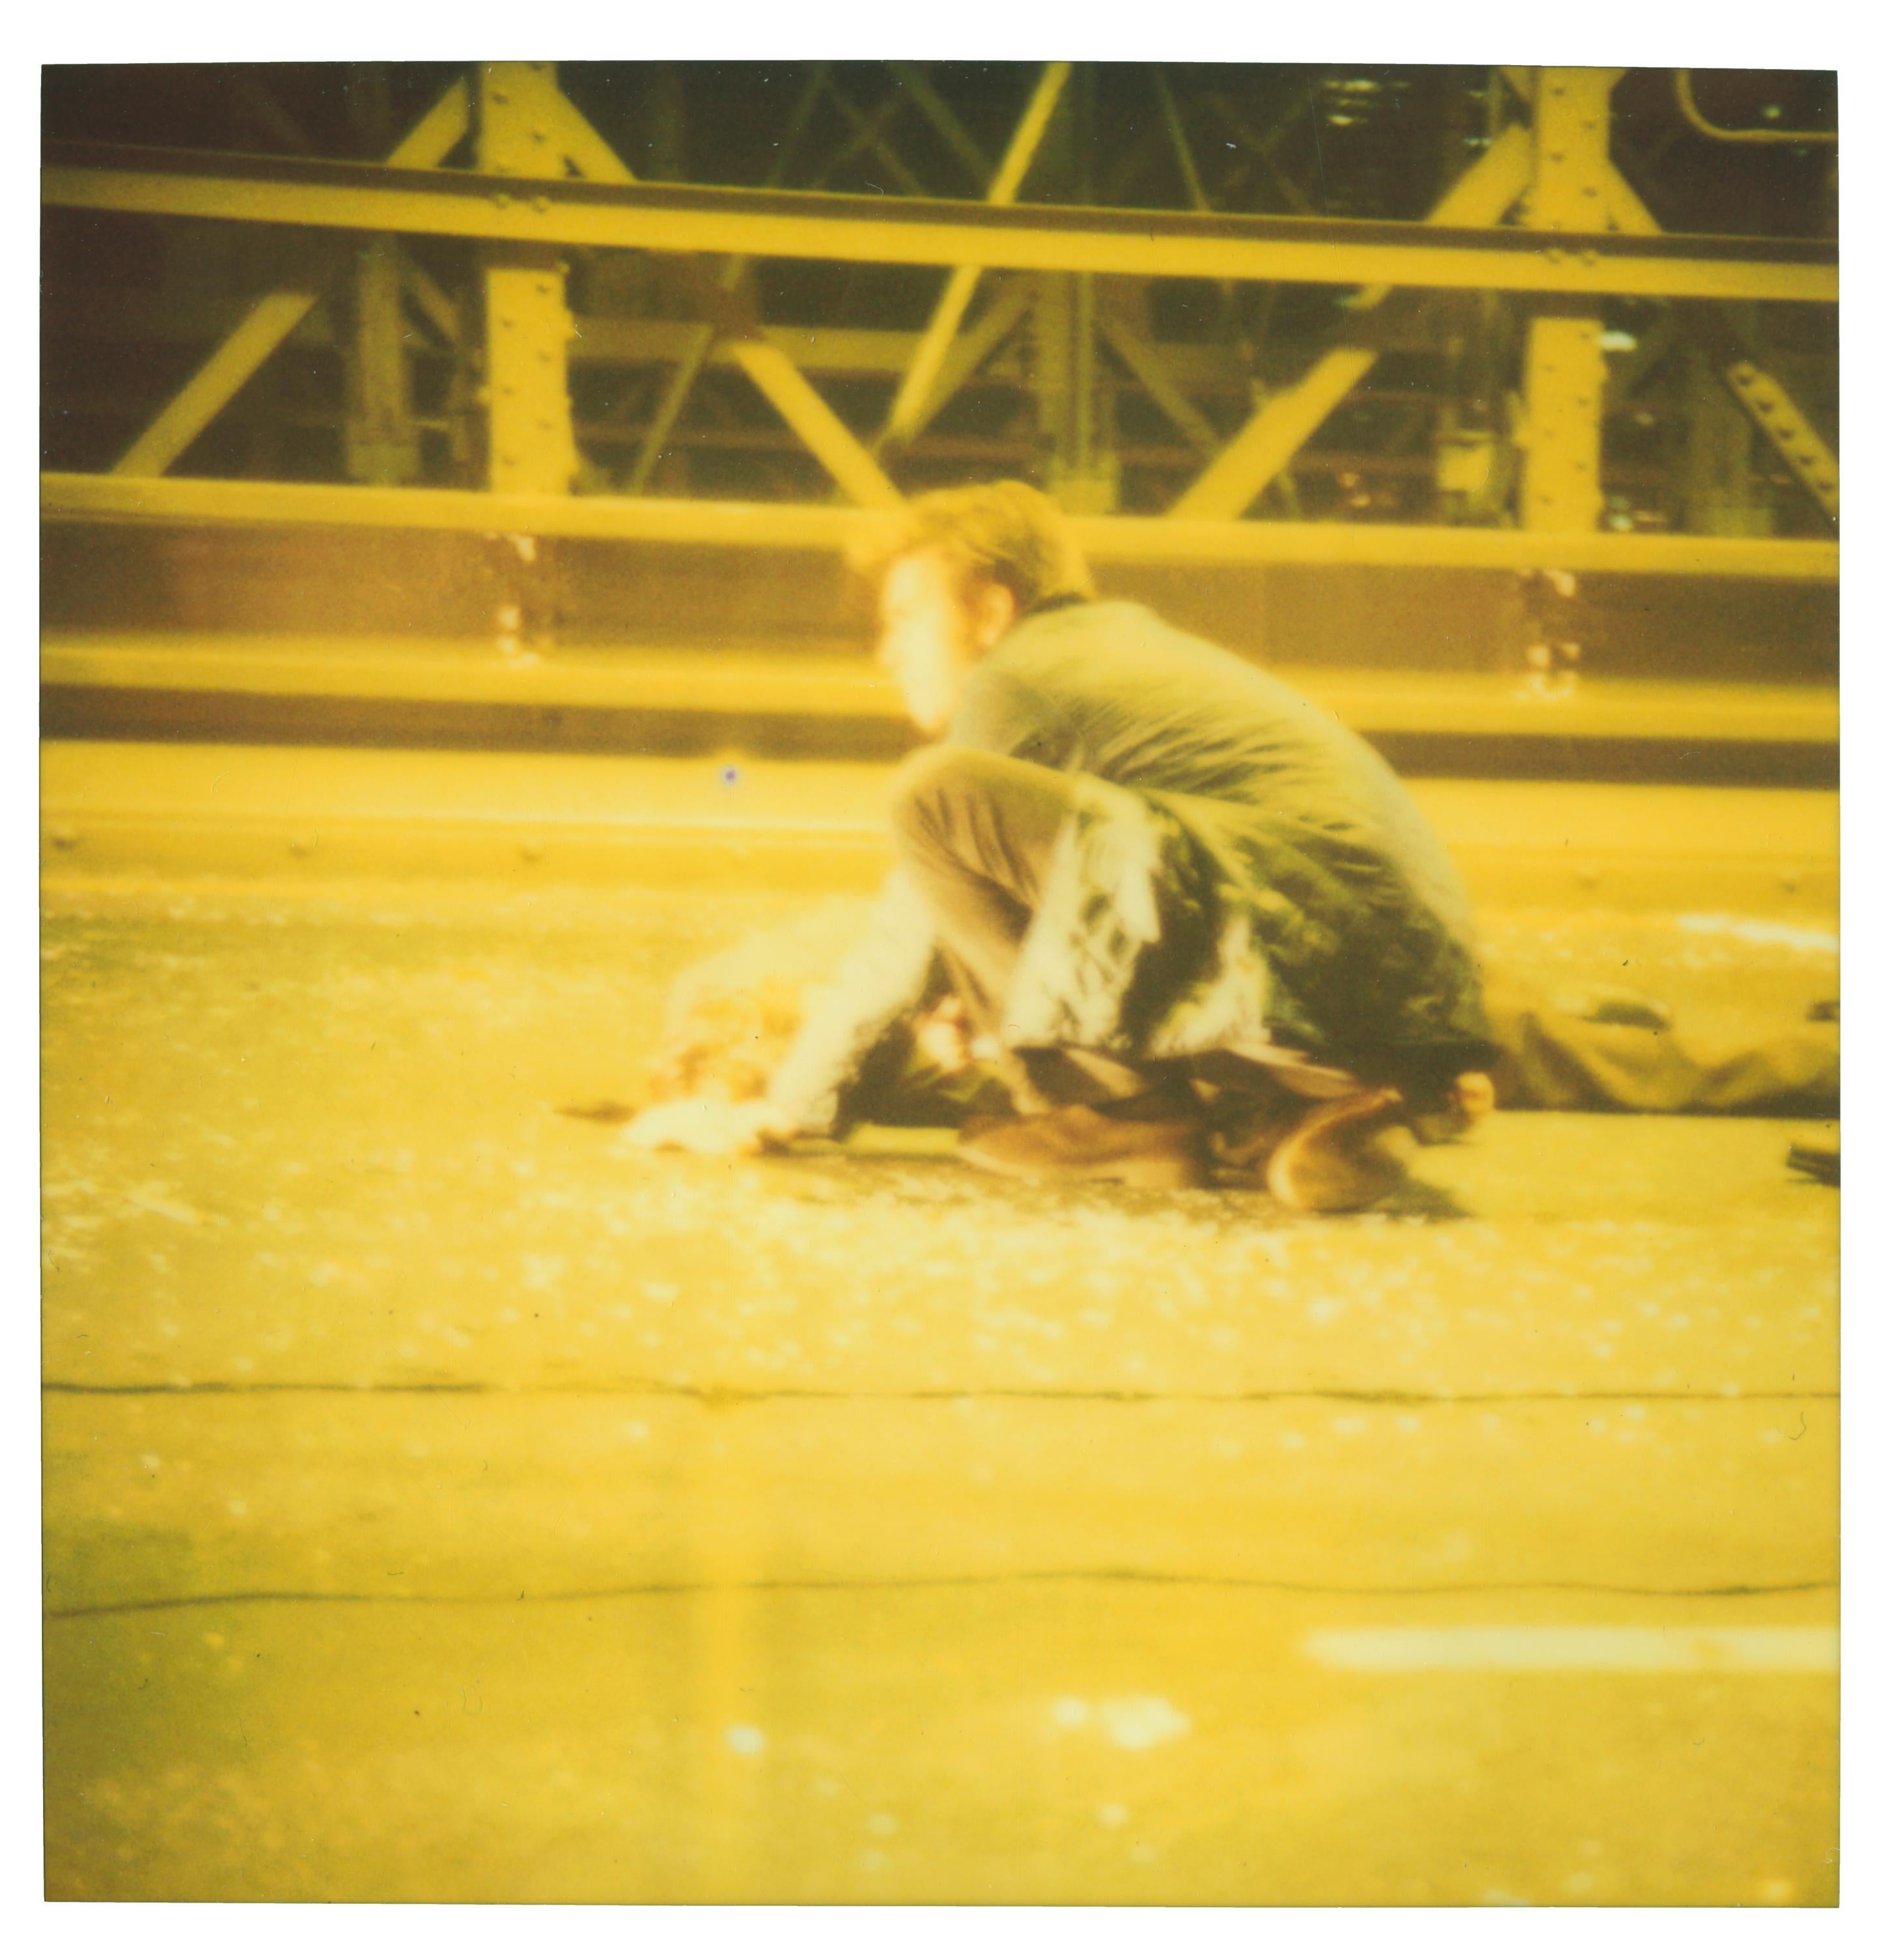 Stefanie Schneider Color Photograph - Accident II - (Stay), analog, 128x125cm, featuring Ewan McGregor